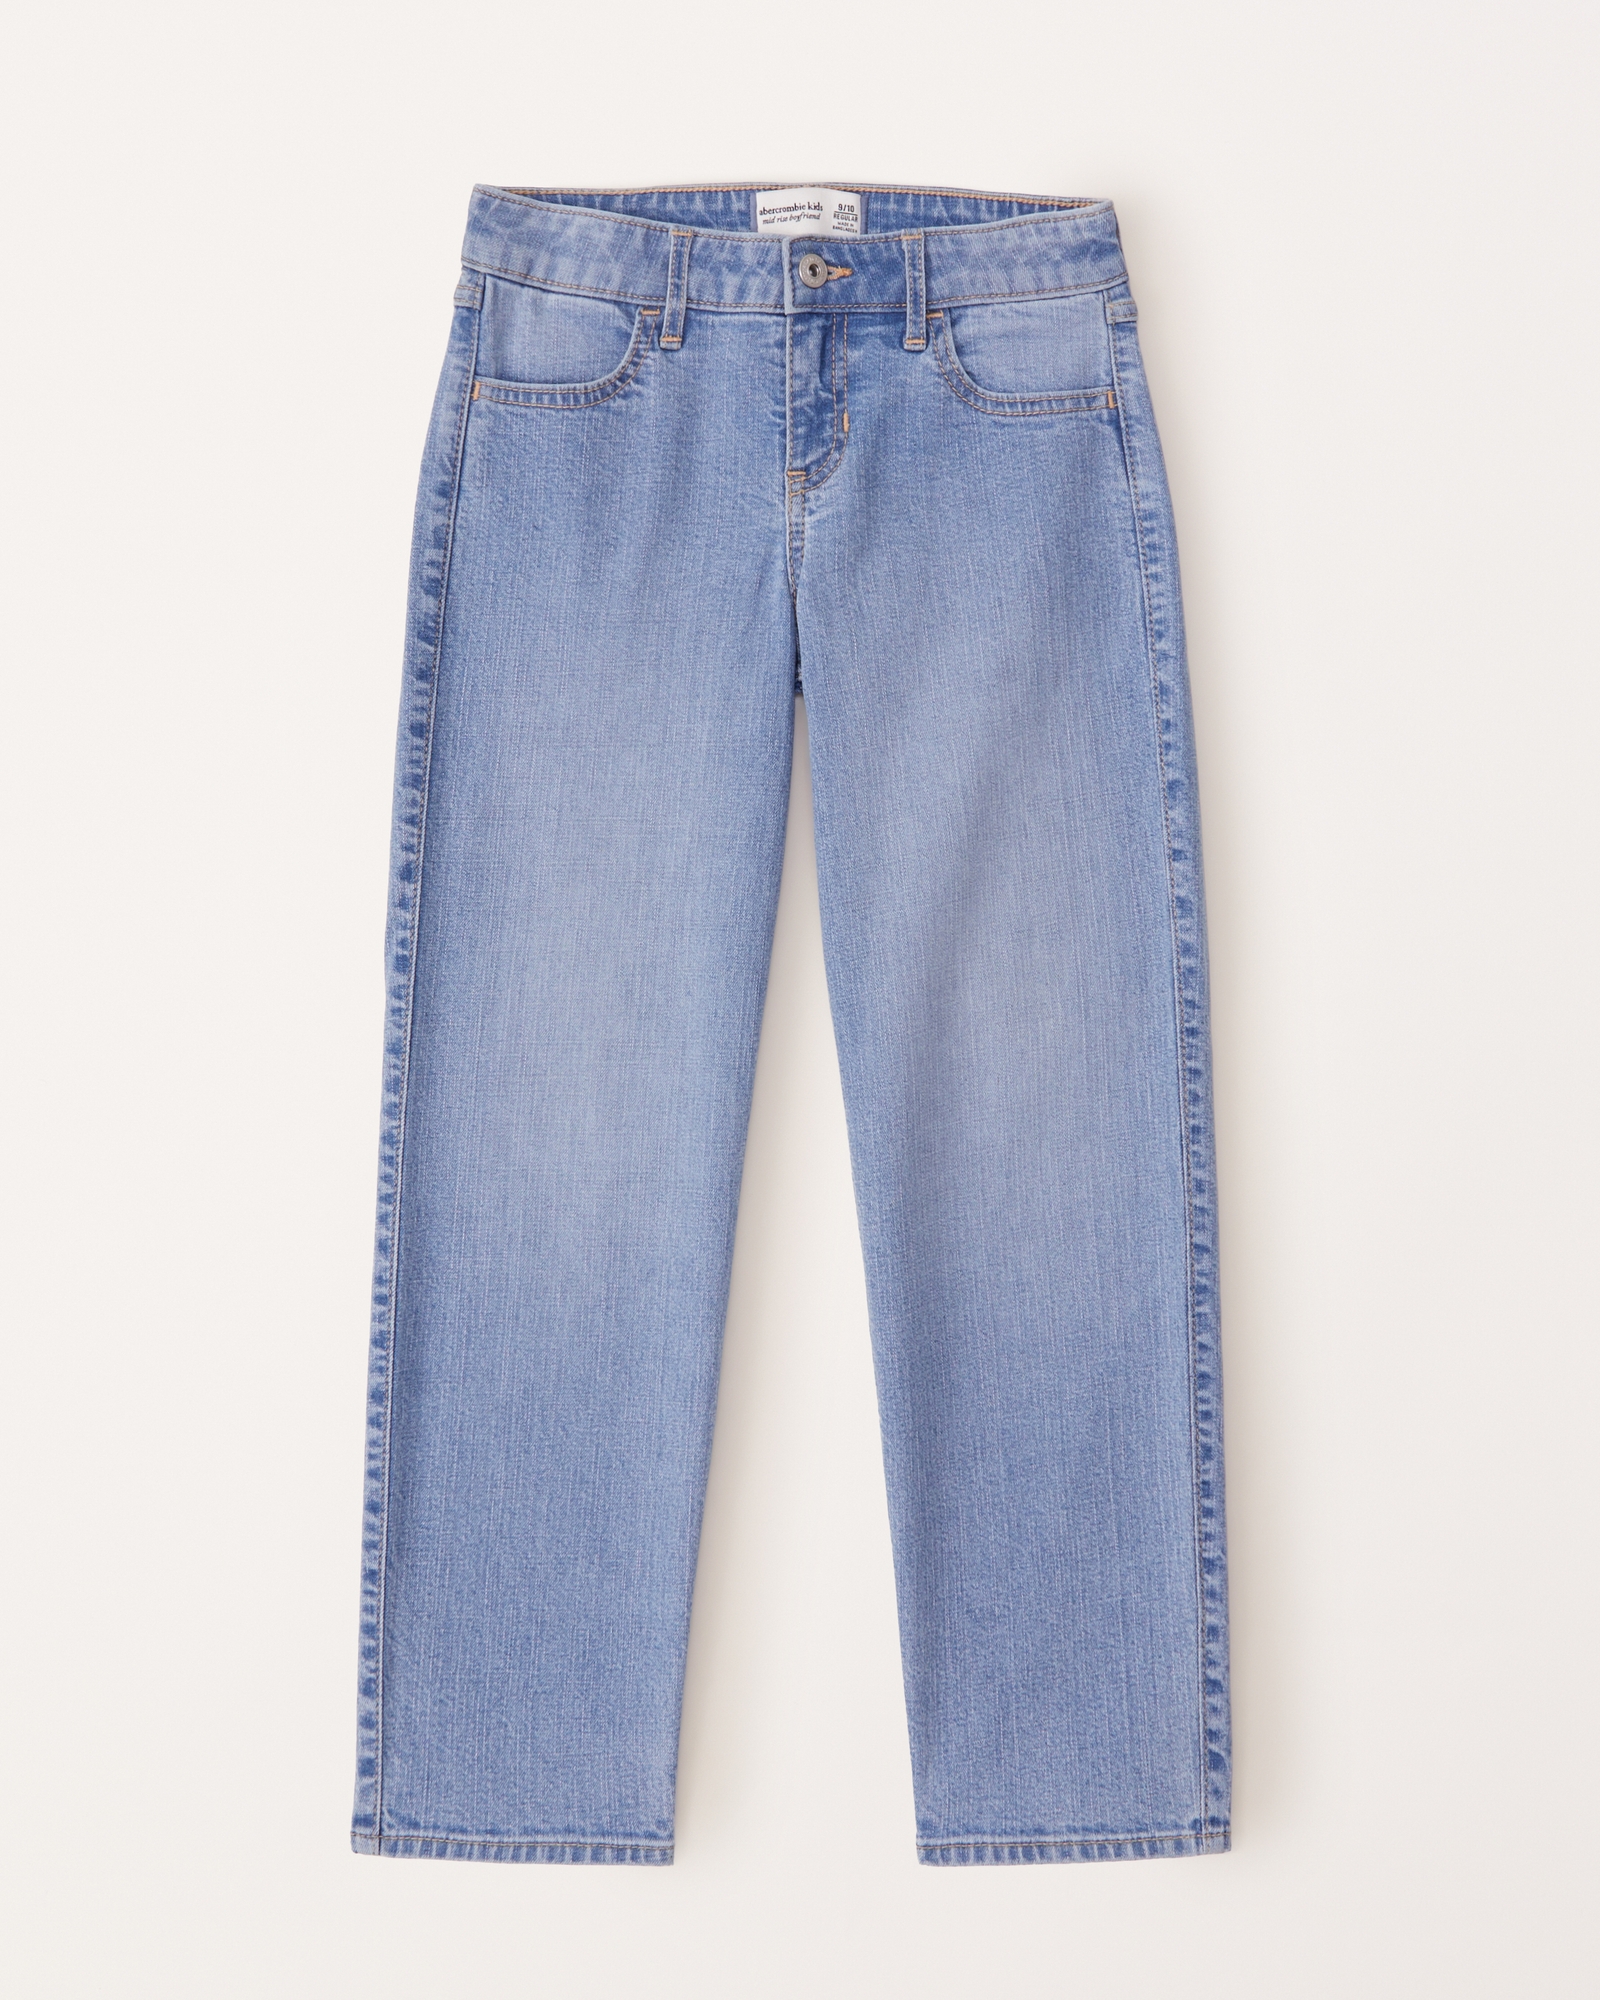 GIRLS NEXT Jeans Elasticated Cotton Denim Blue 3 4 5 6 7 8 9 11 12 13 14  (B25)